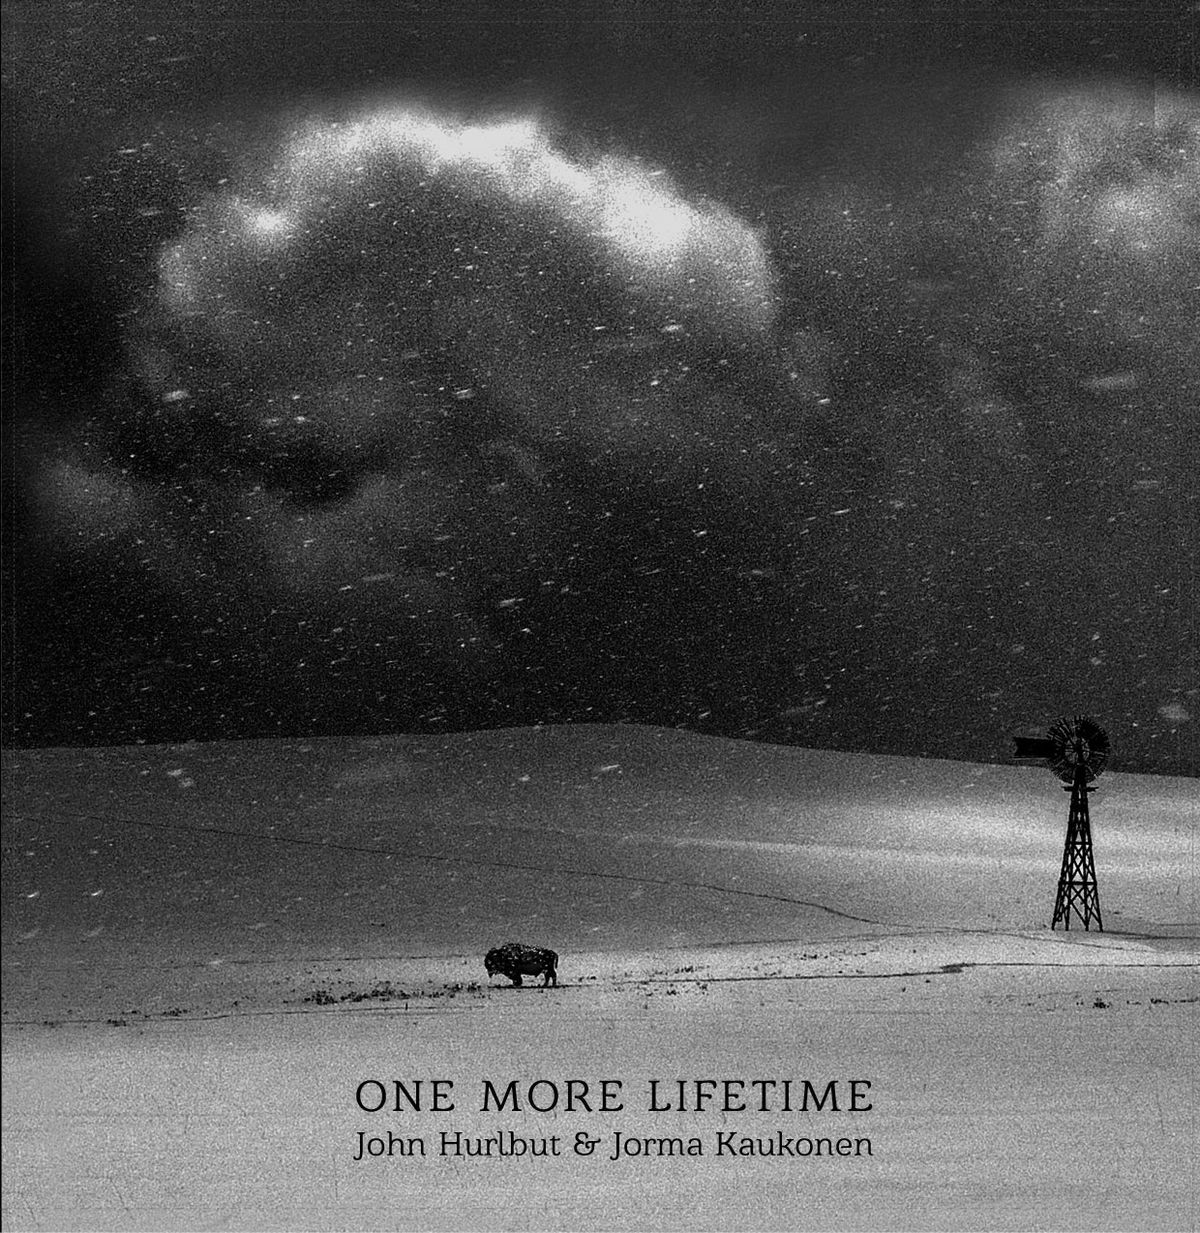 John Hurlbut and Jorma Kaukonen\u2019s "One More Lifetime\u201d Album Release